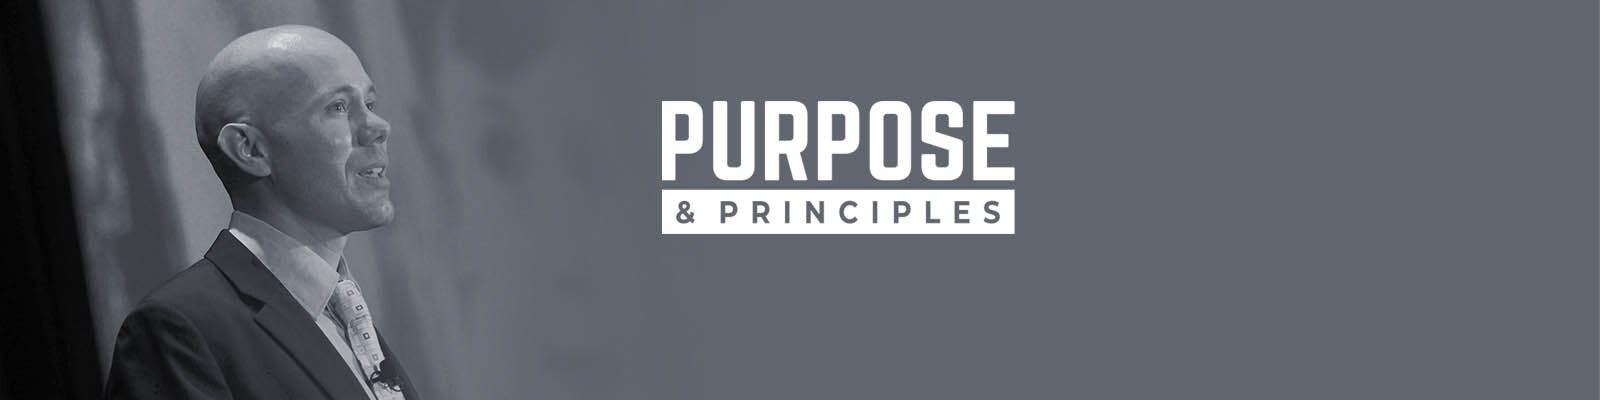 Purpose & Principles Podcast